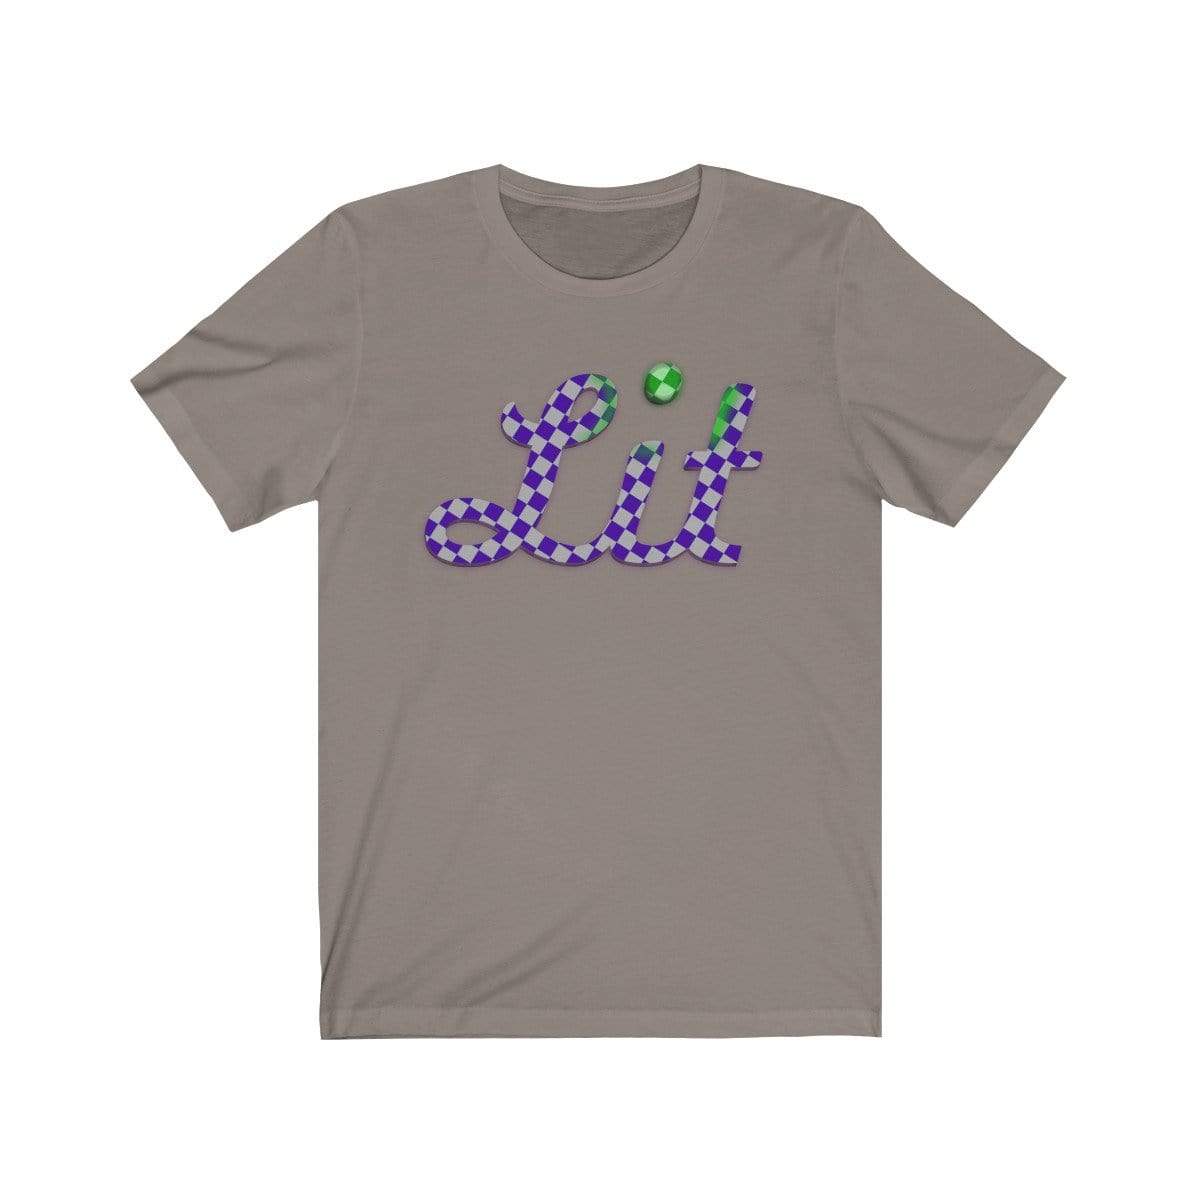 Plumskum T-Shirt Pebble Brown / S Checkered Lit T-shirt